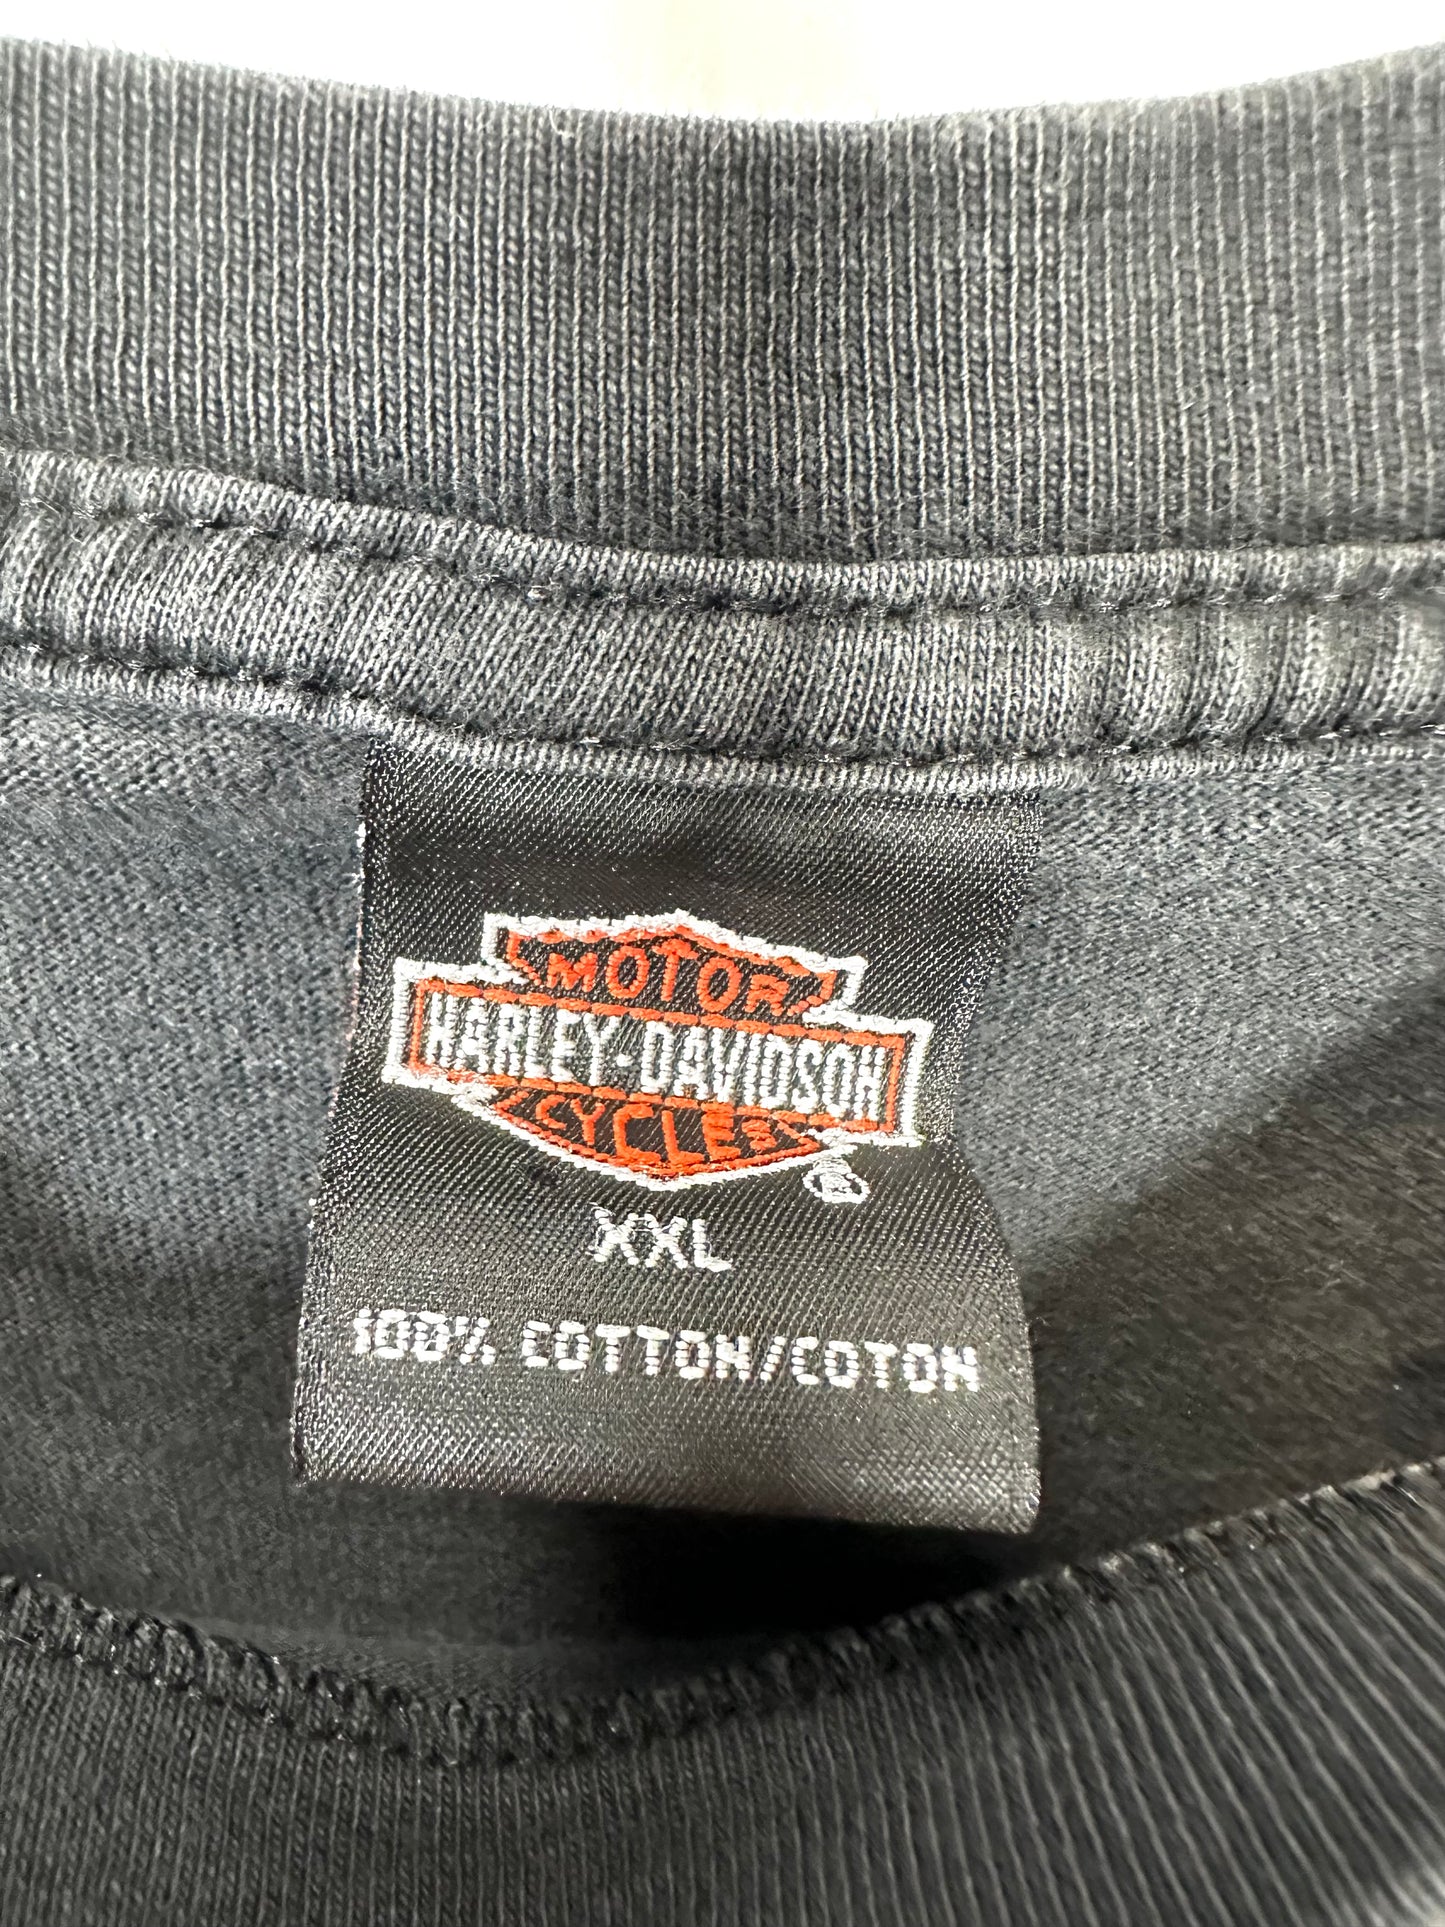 Harley Davidson T Shirt - XXL